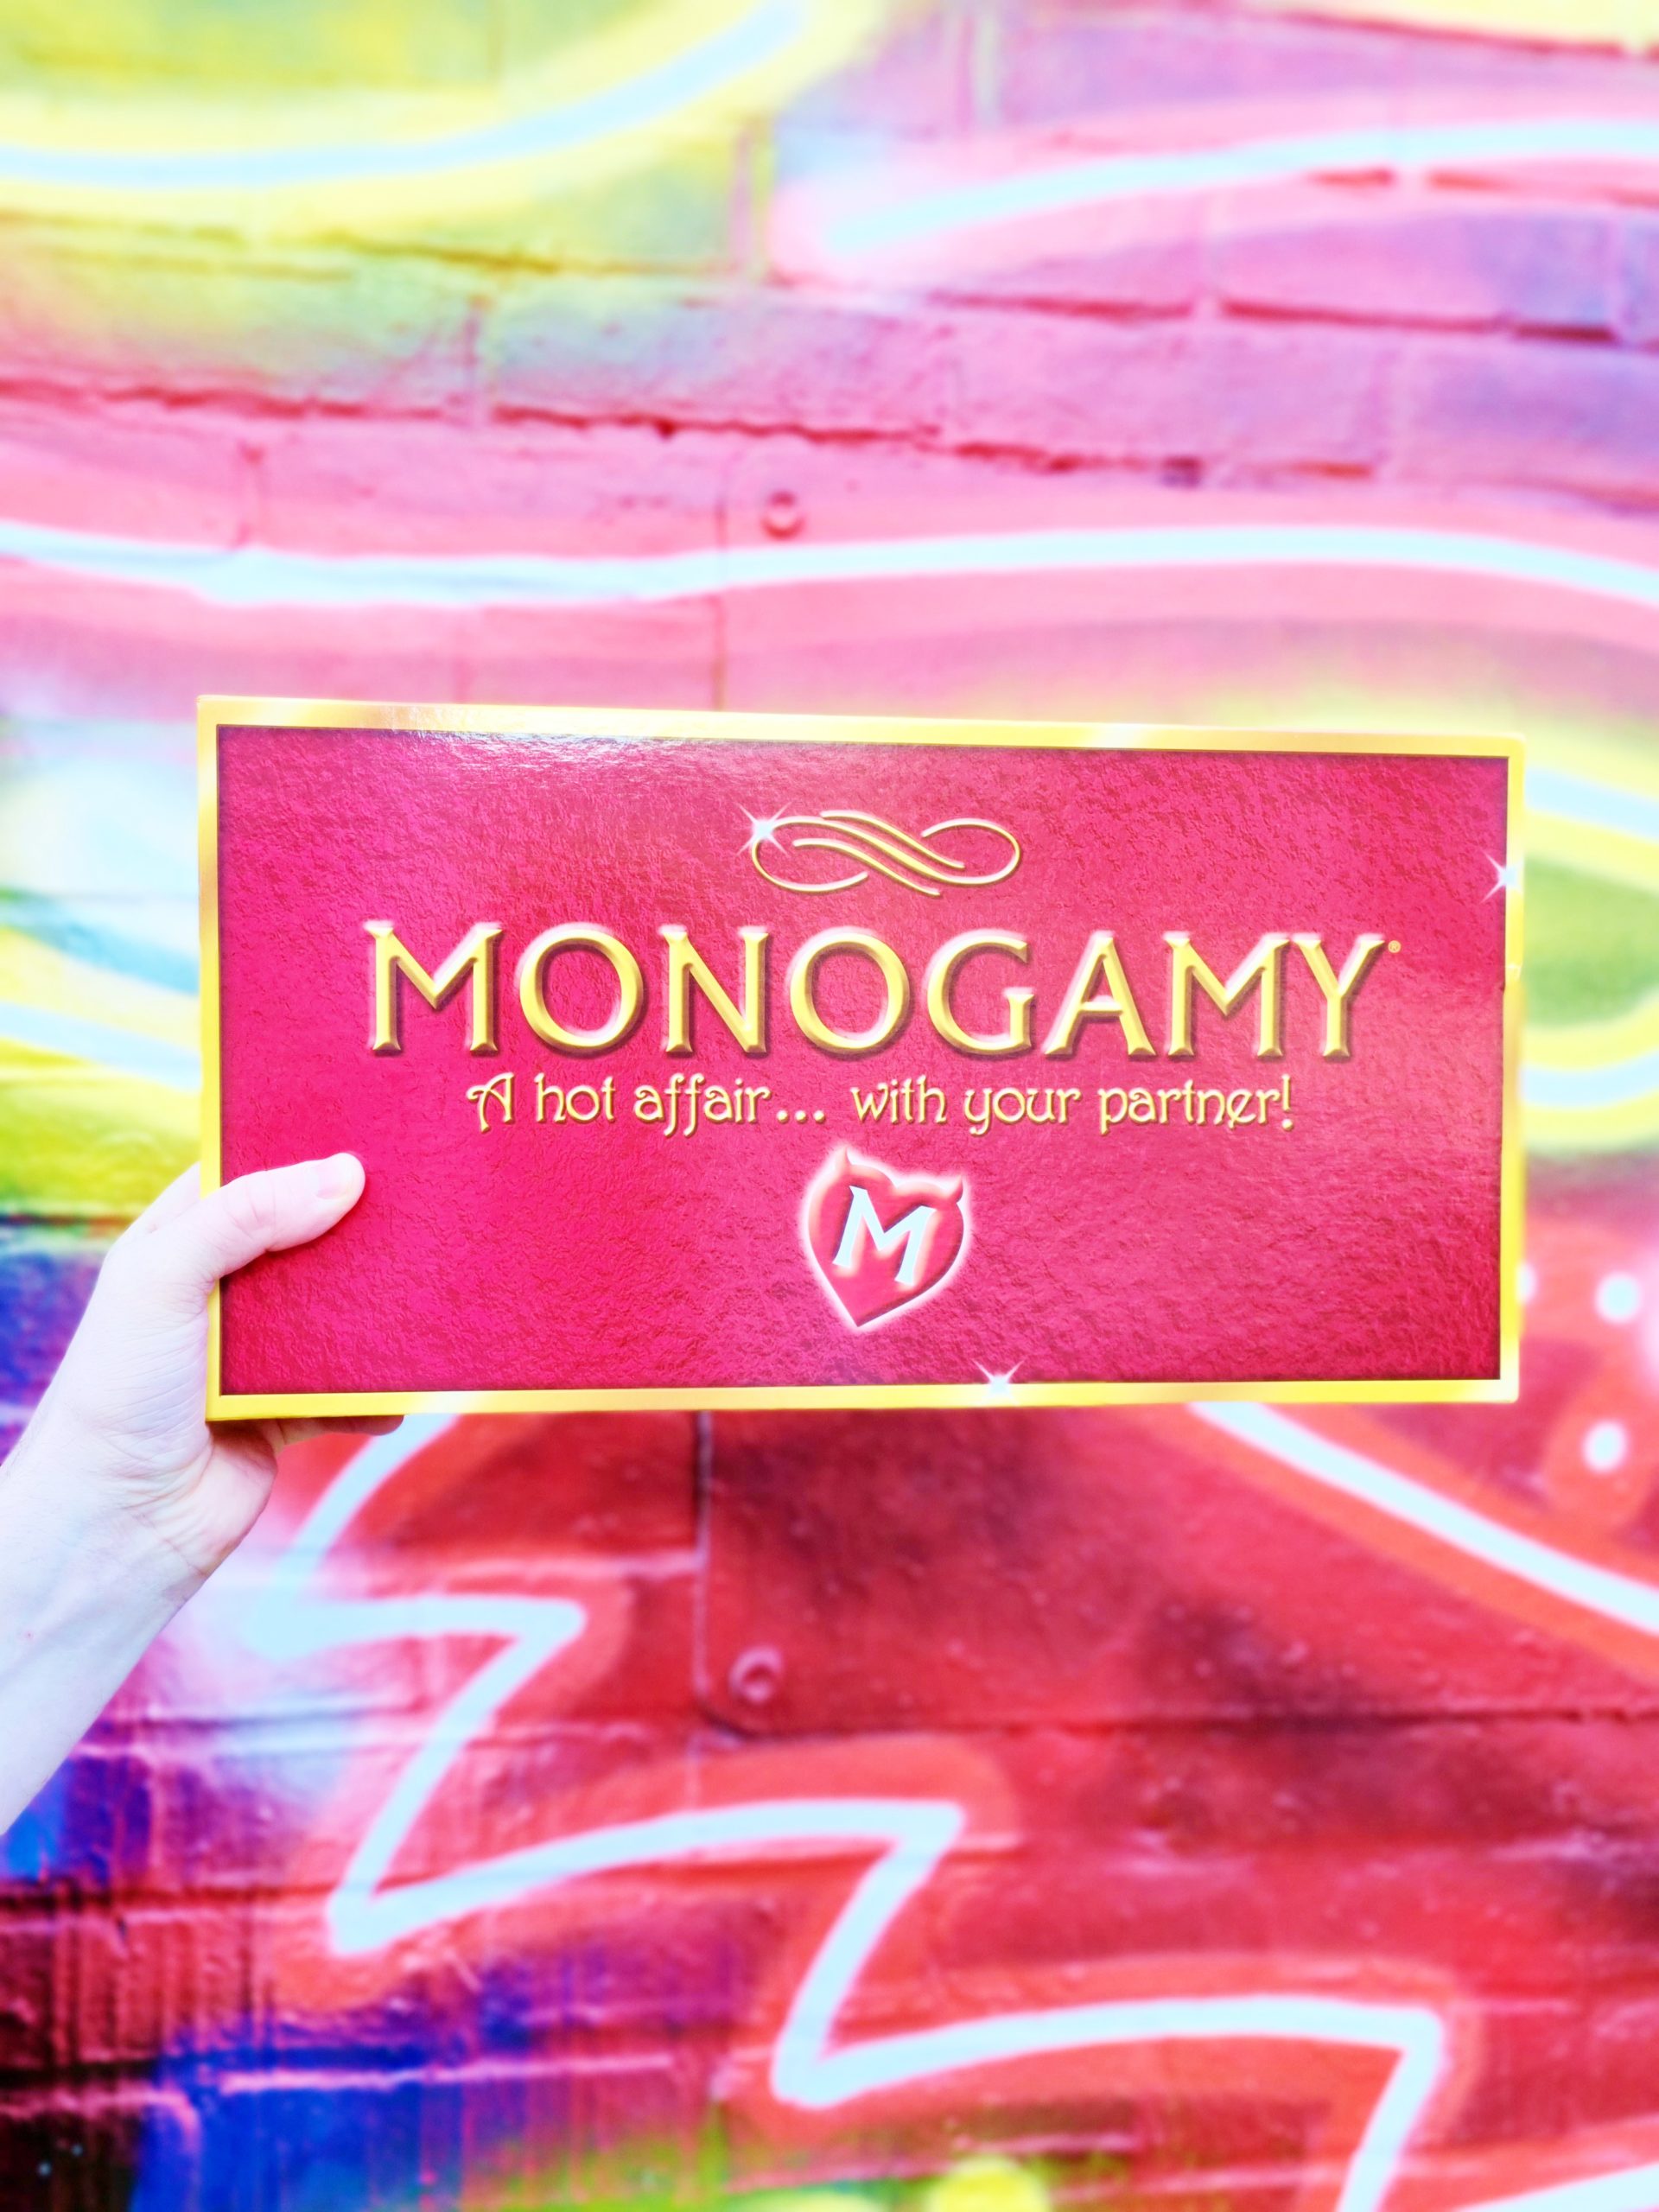 <img src="monogamy.jpg" alt="monogamy adult board game"/> 